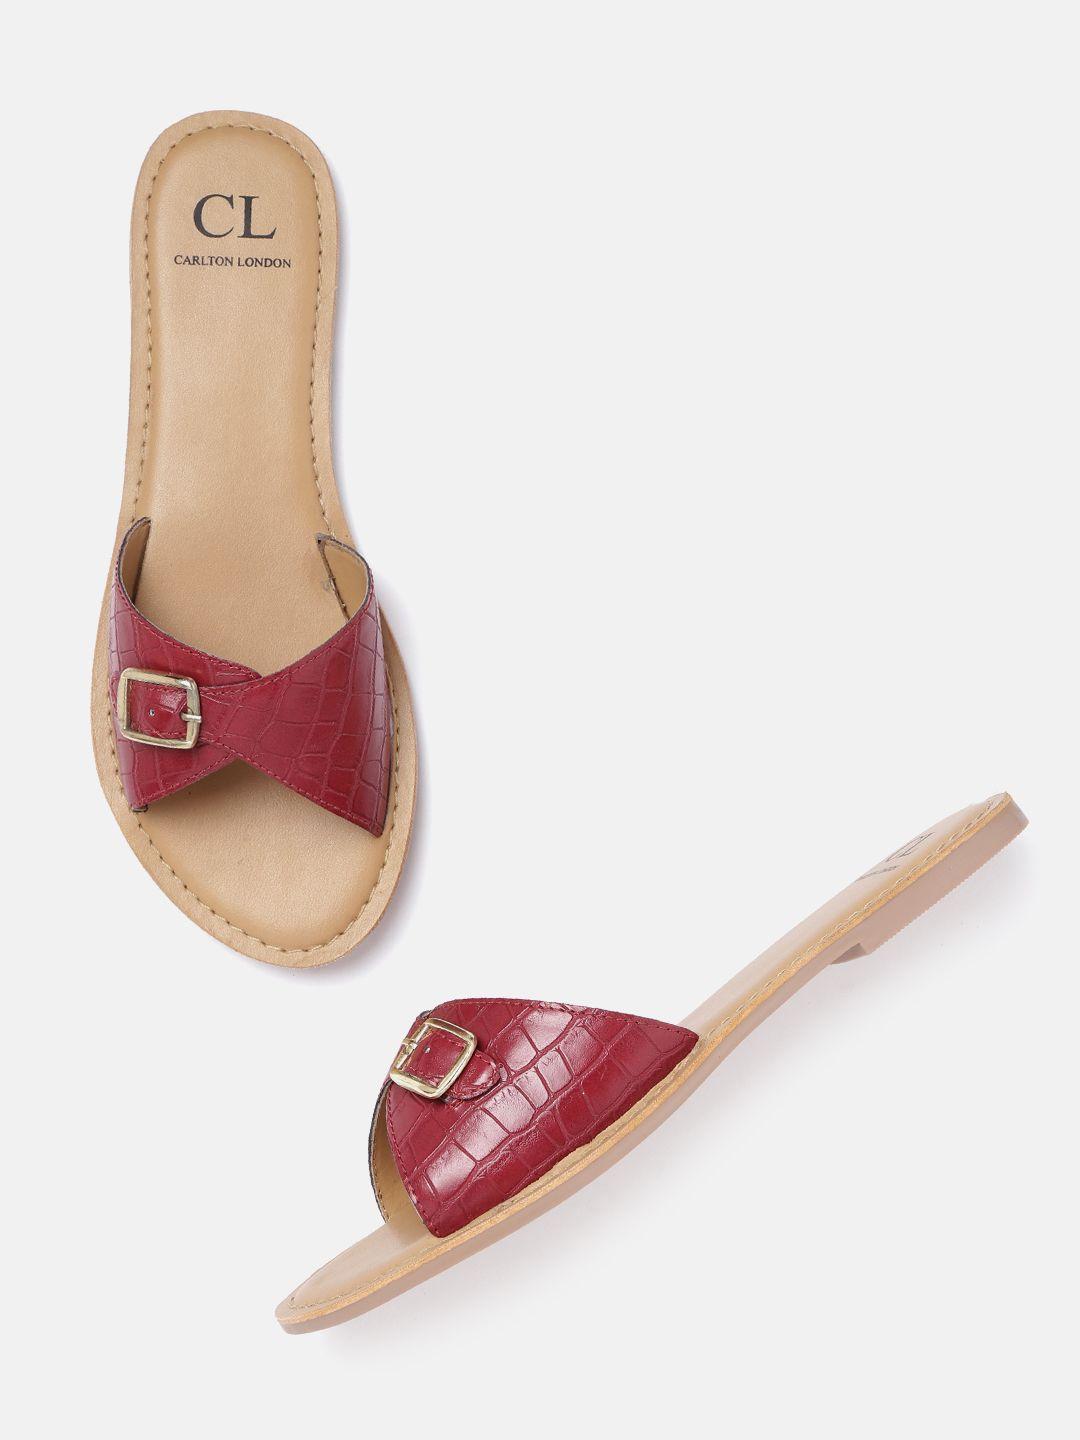 carlton london women maroon croc textured open toe flats with buckle detail